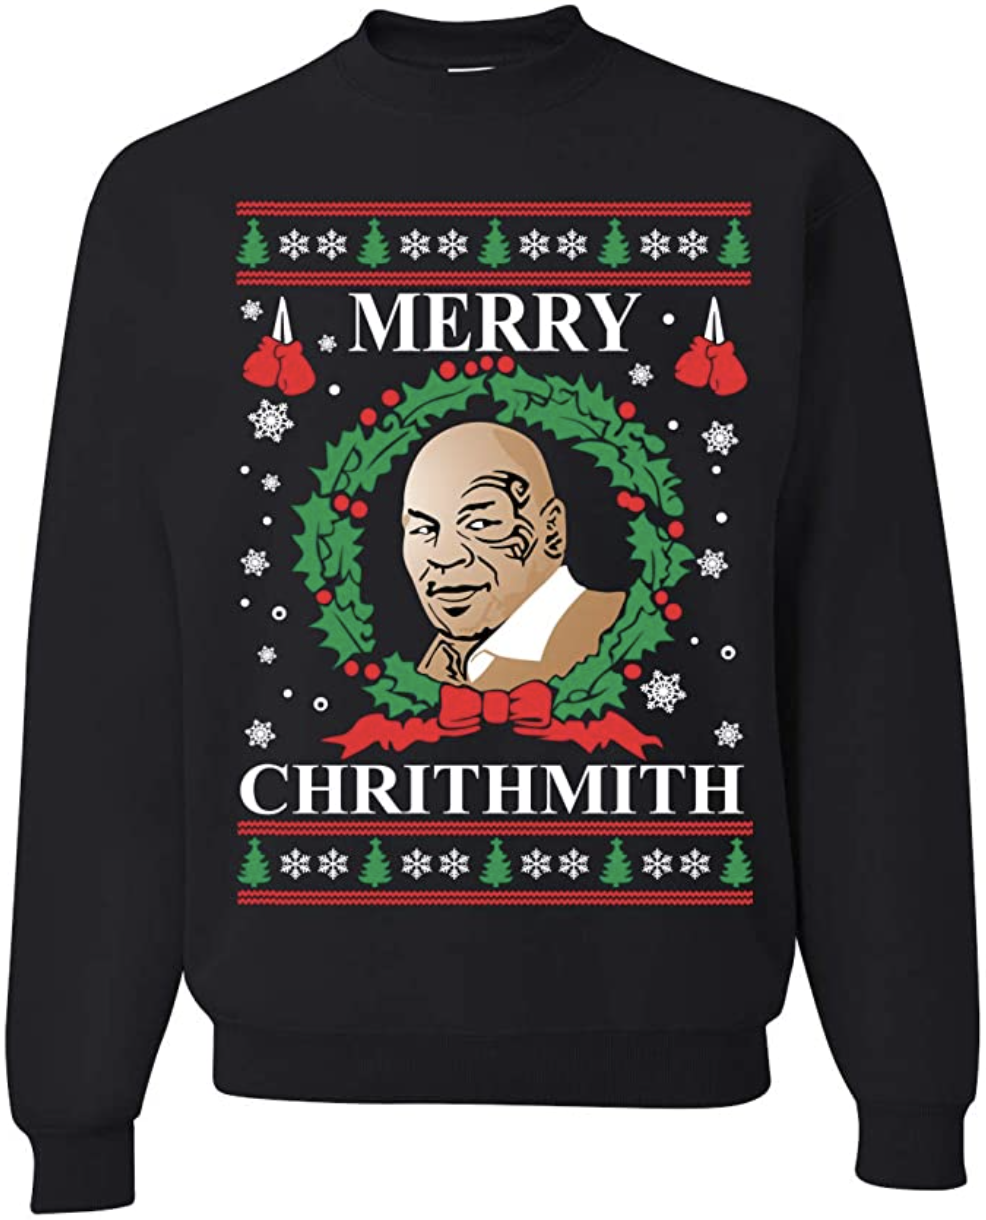 Adults Unisex Mike Tyson funny Christmas Chrithmith Sweatshirt Grey Novelty 